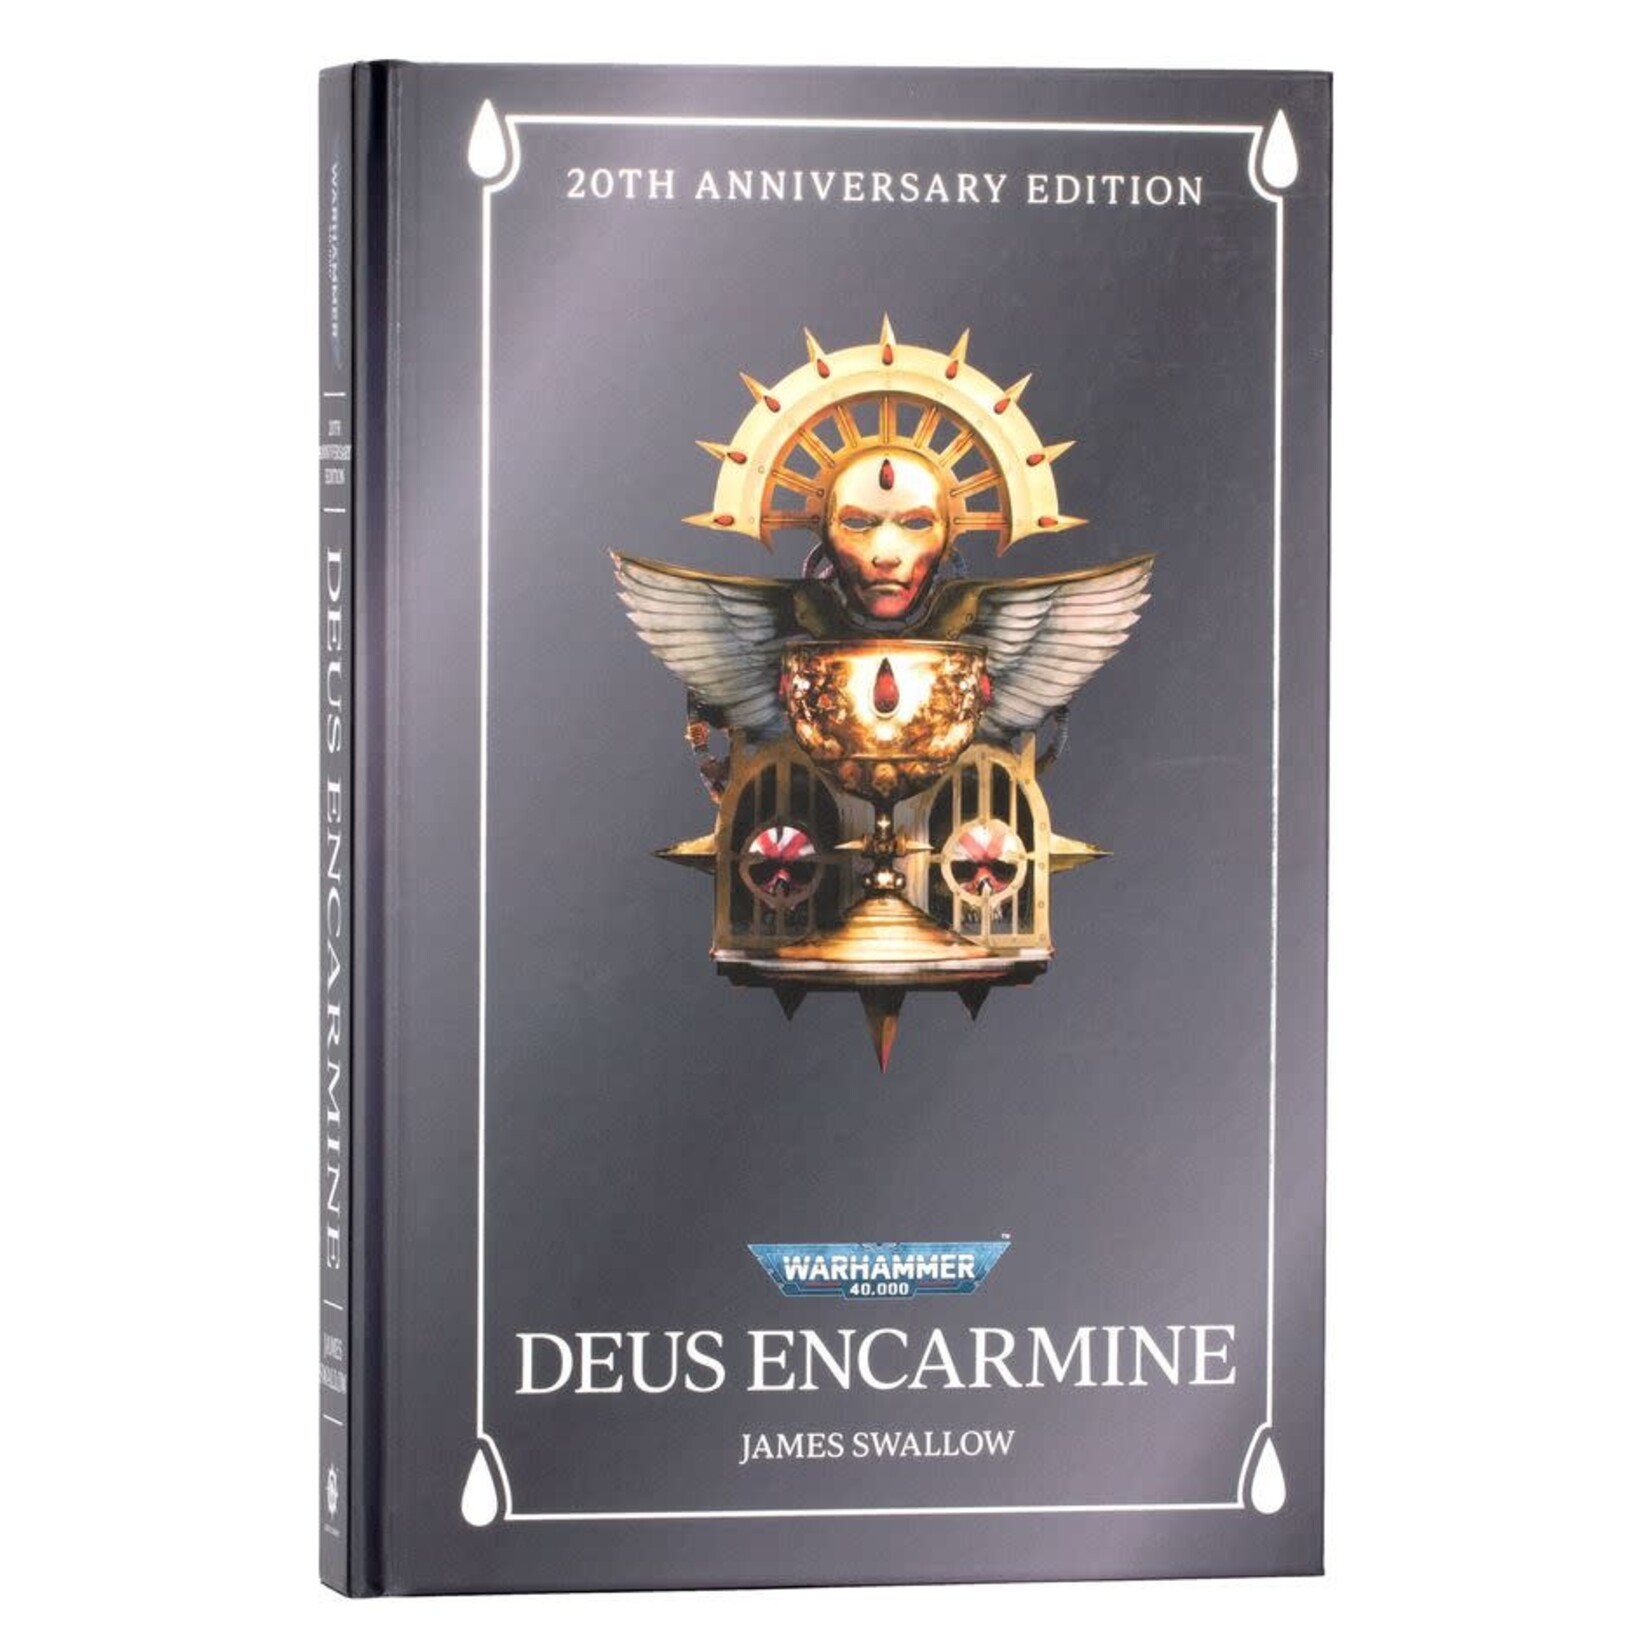 Deus Encarmine 20th Anniversary Edition HardBack